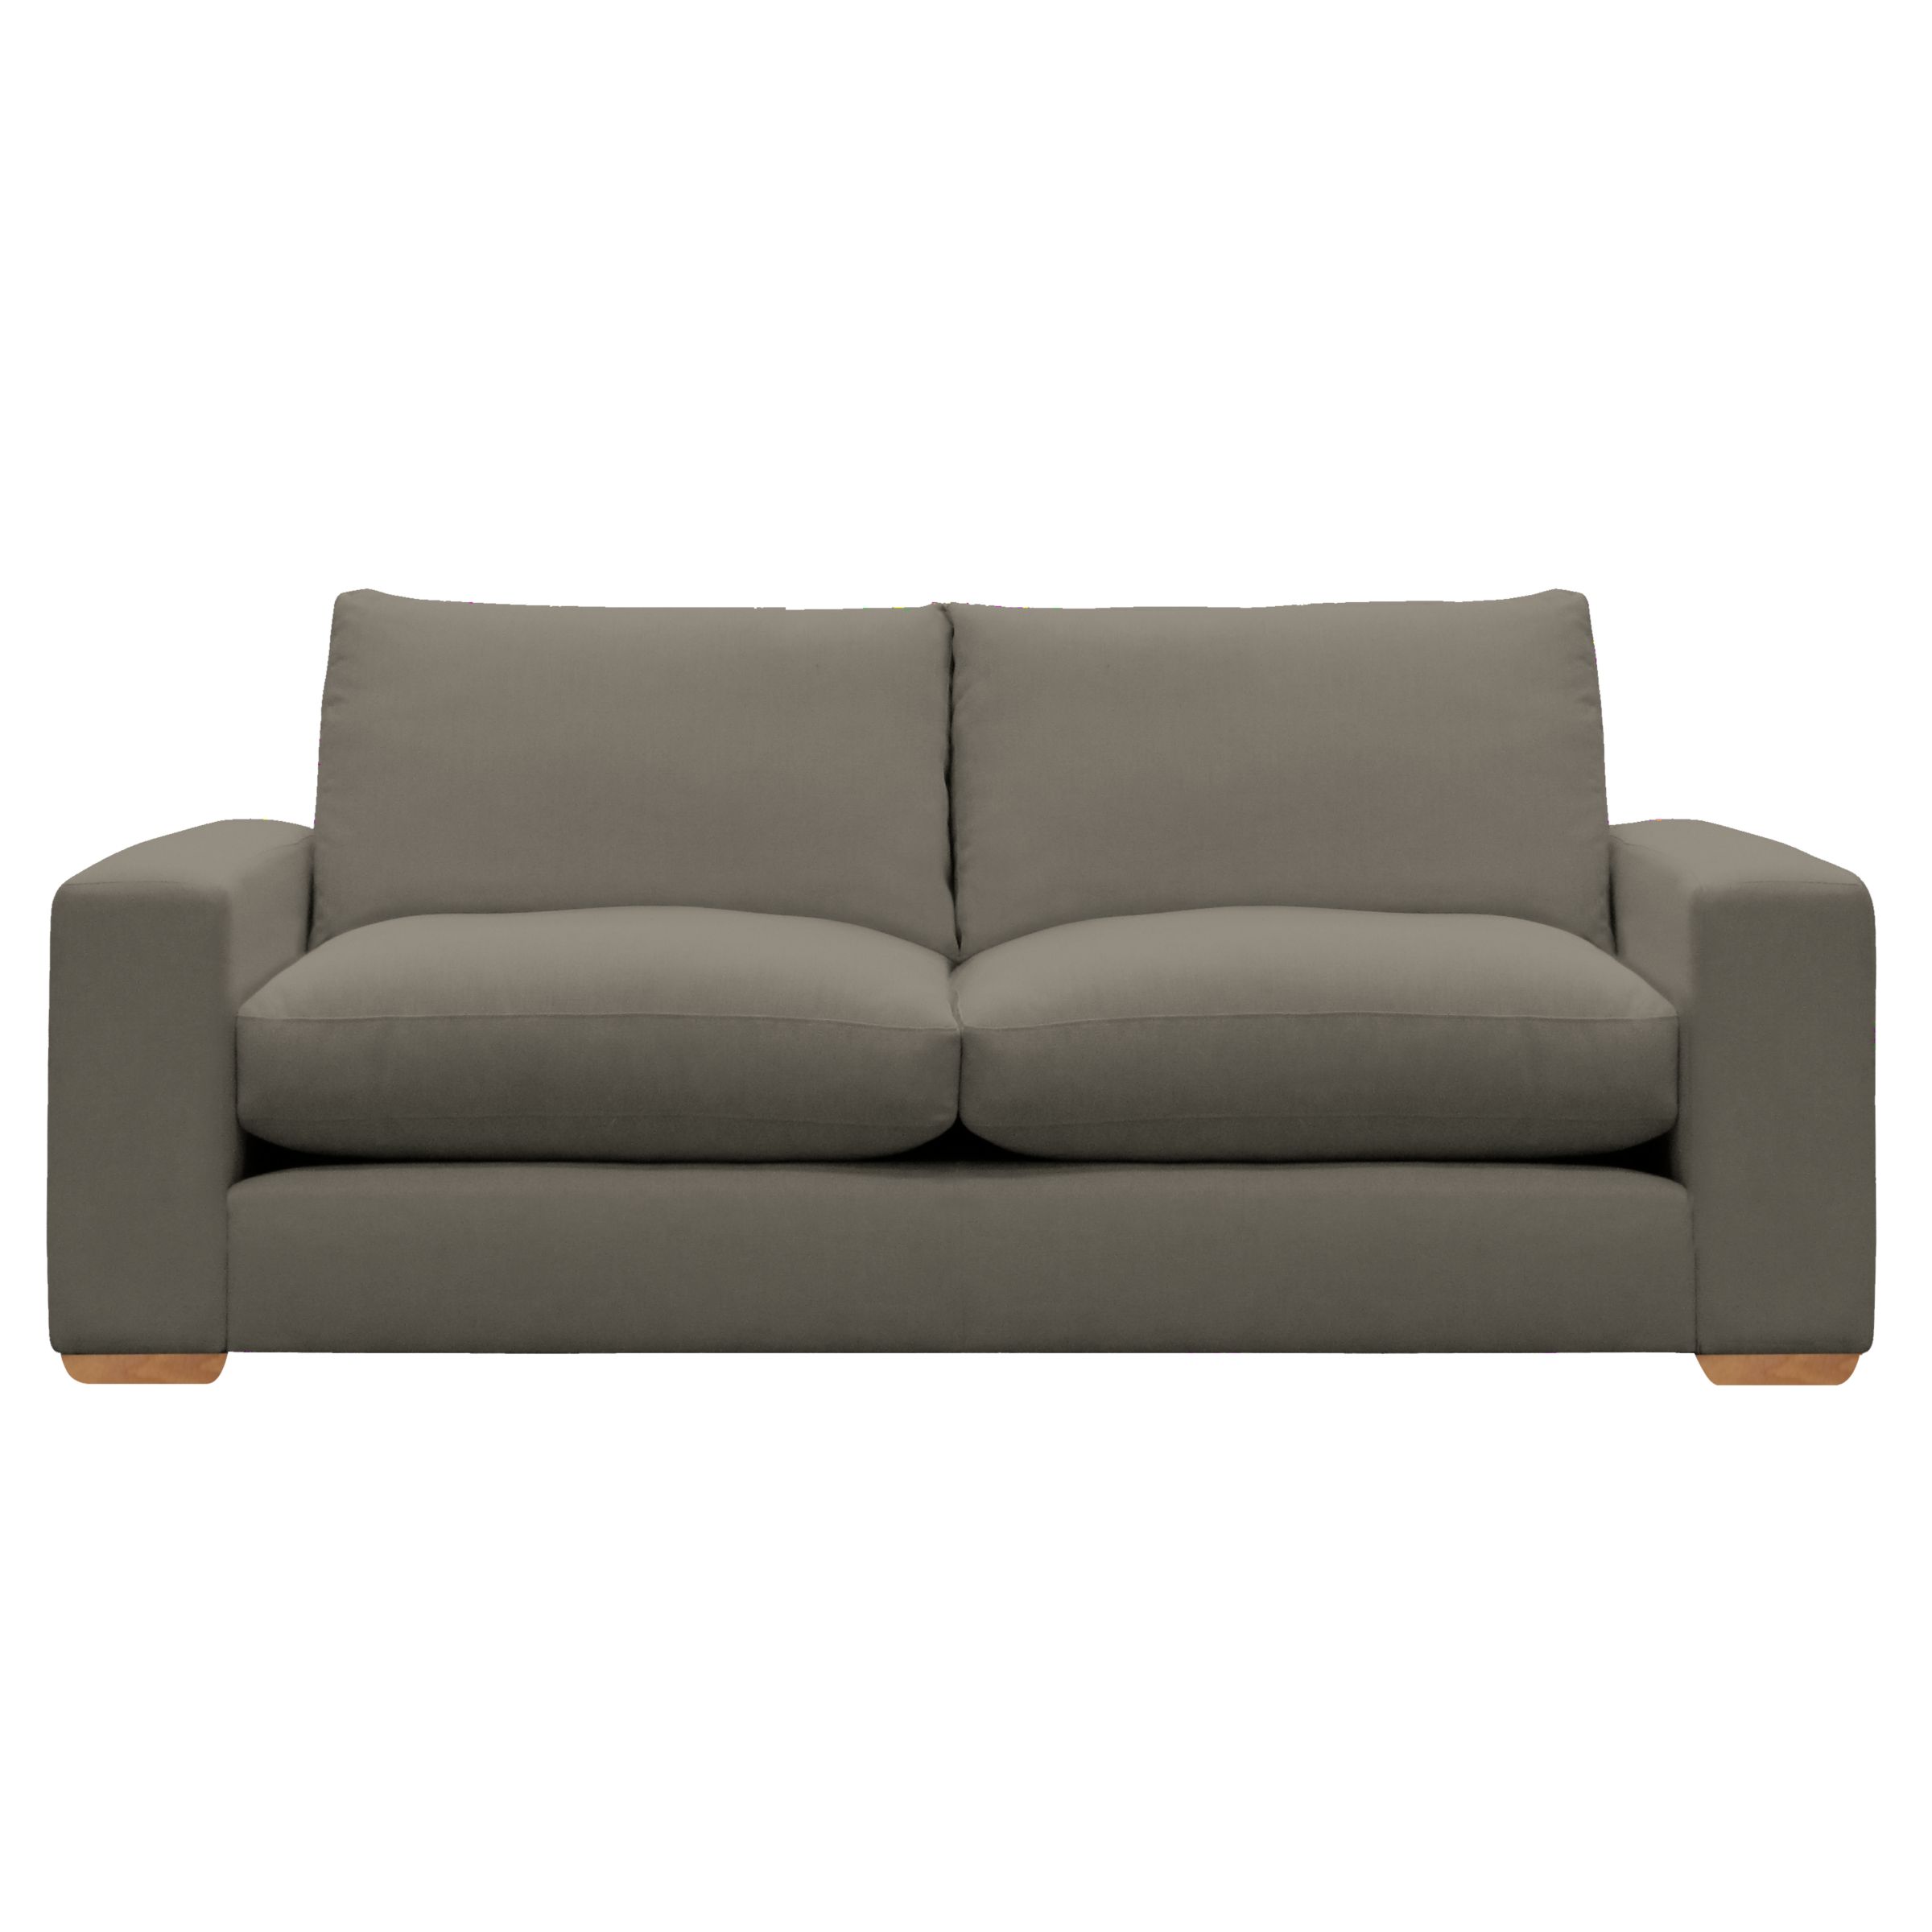 John Lewis Options Wide Arm Large Sofa, Linley Slate, width 200cm